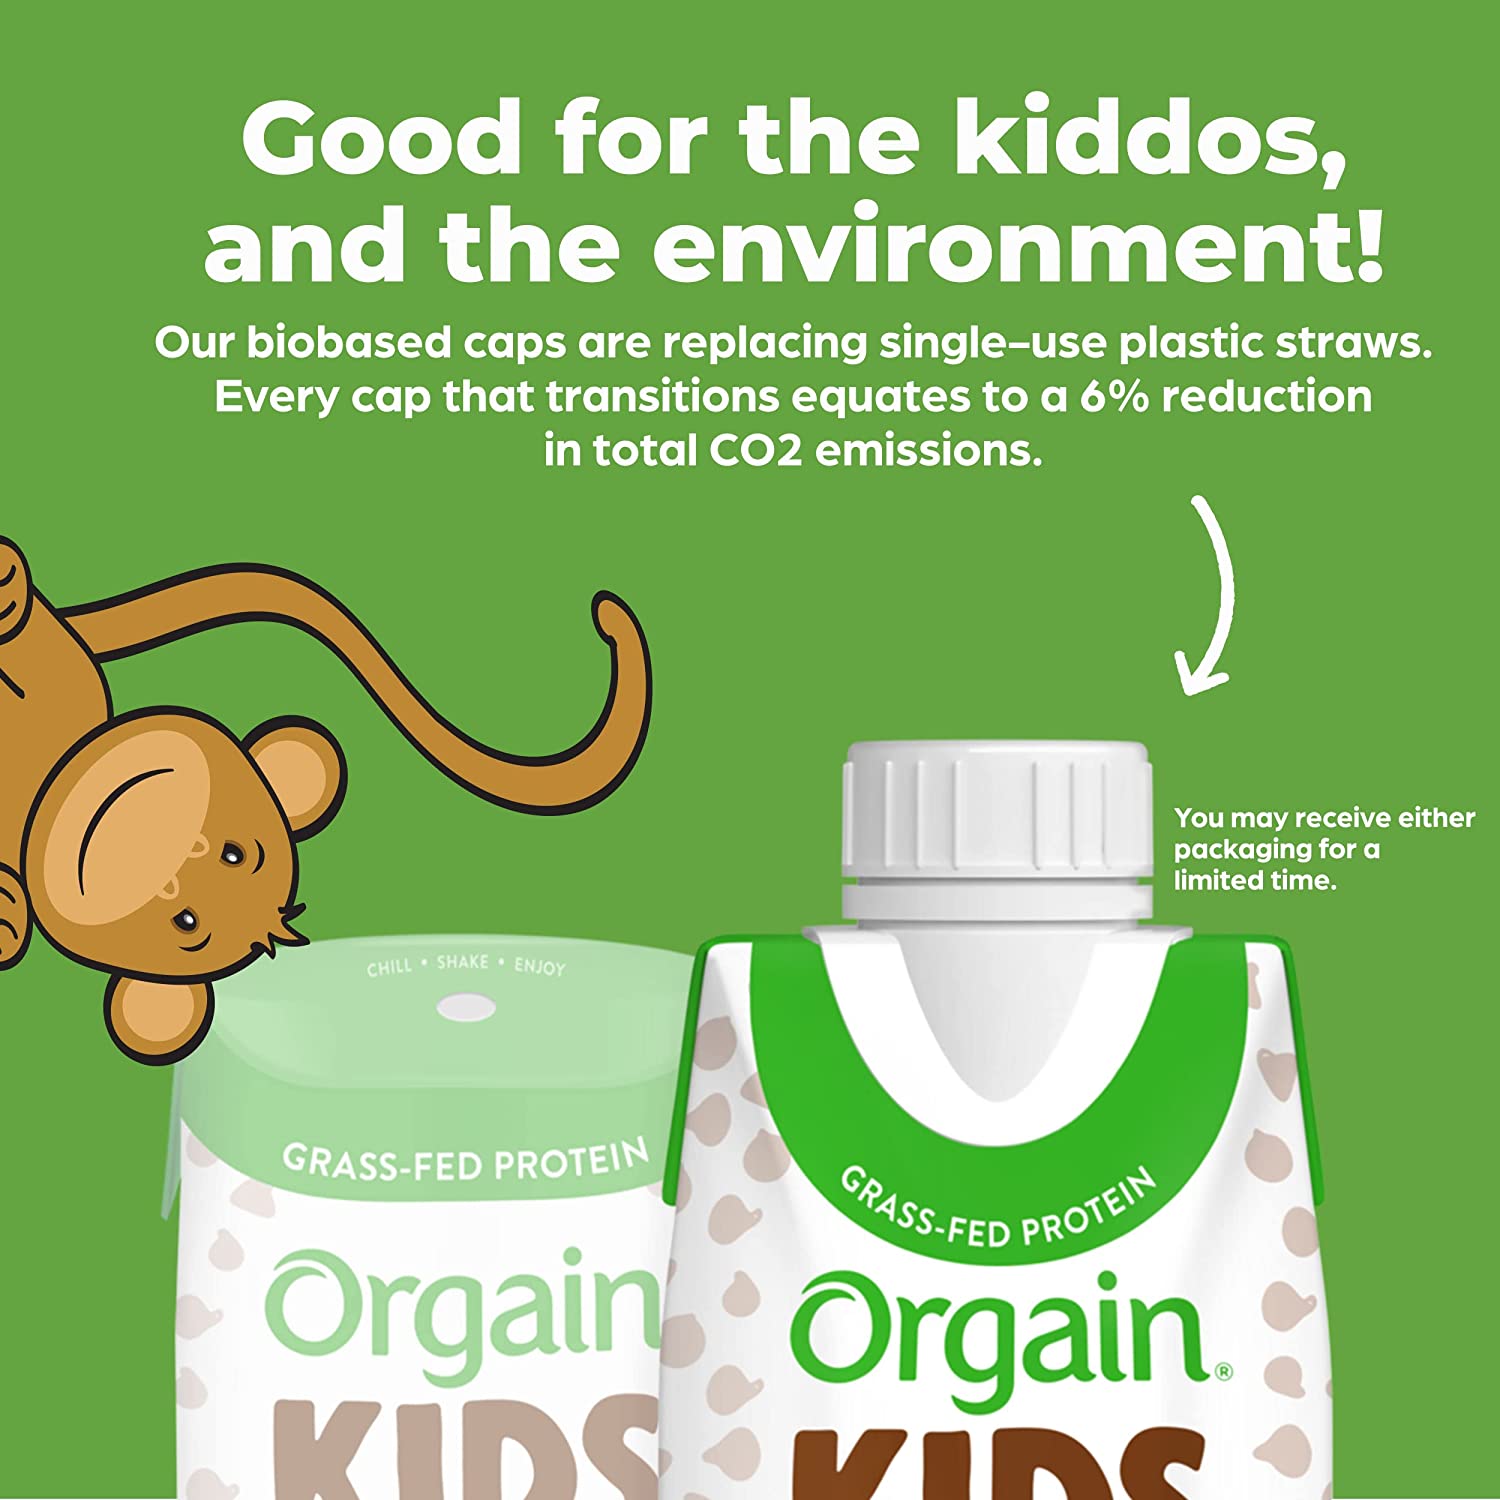 Orgain Organic Kids Protein Nutritional Shake, Chocolate - 8g of